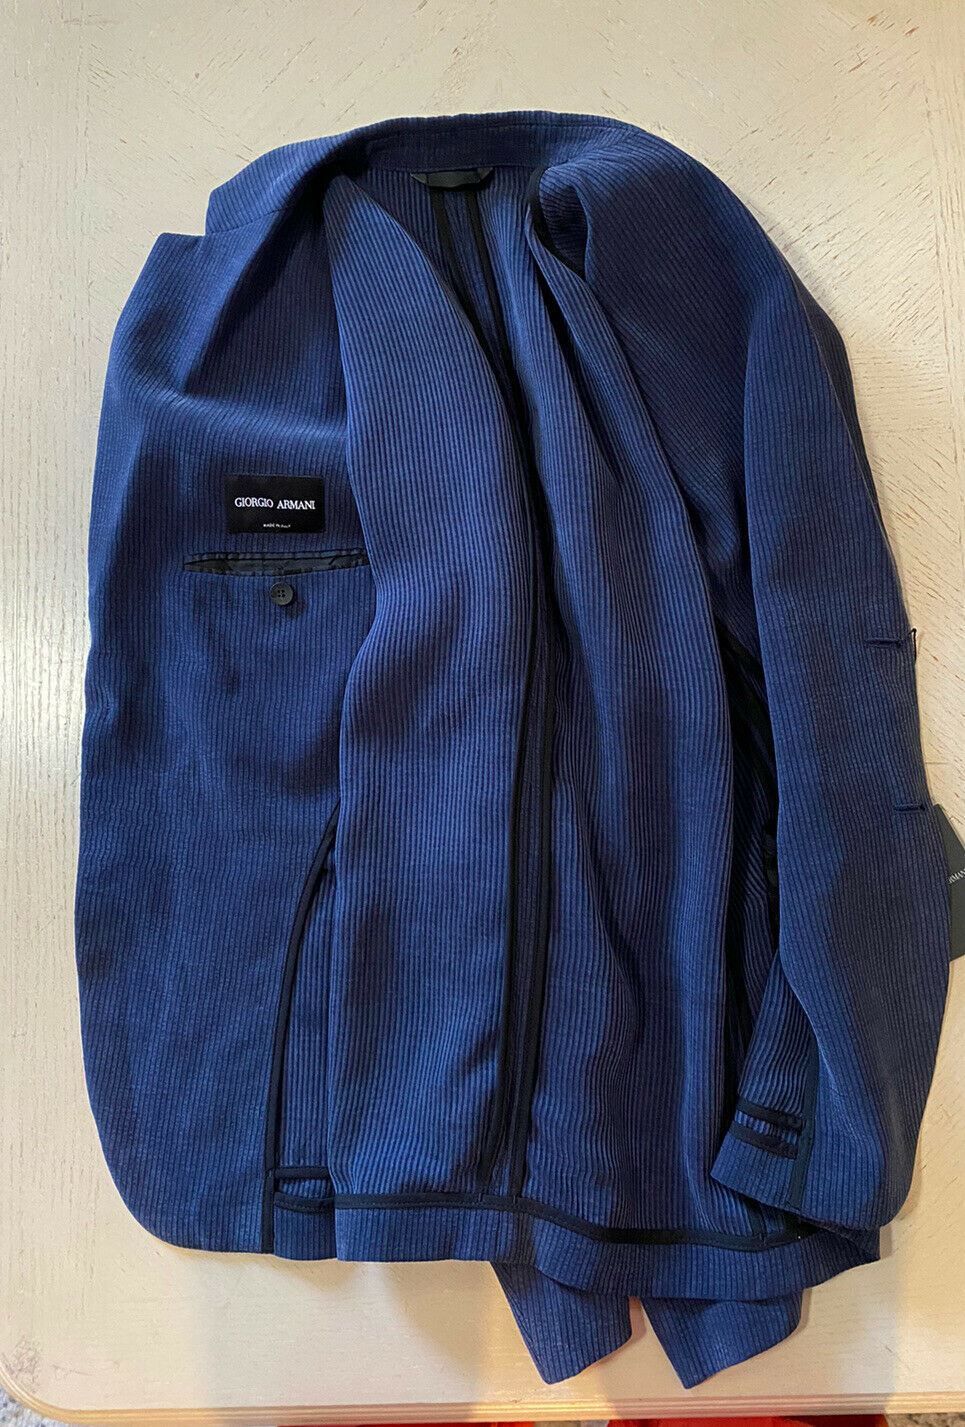 NWT $2095 Giorgio Armani Men’s Coat Jacket Blazer Blue 40 US/50 Eu Italy